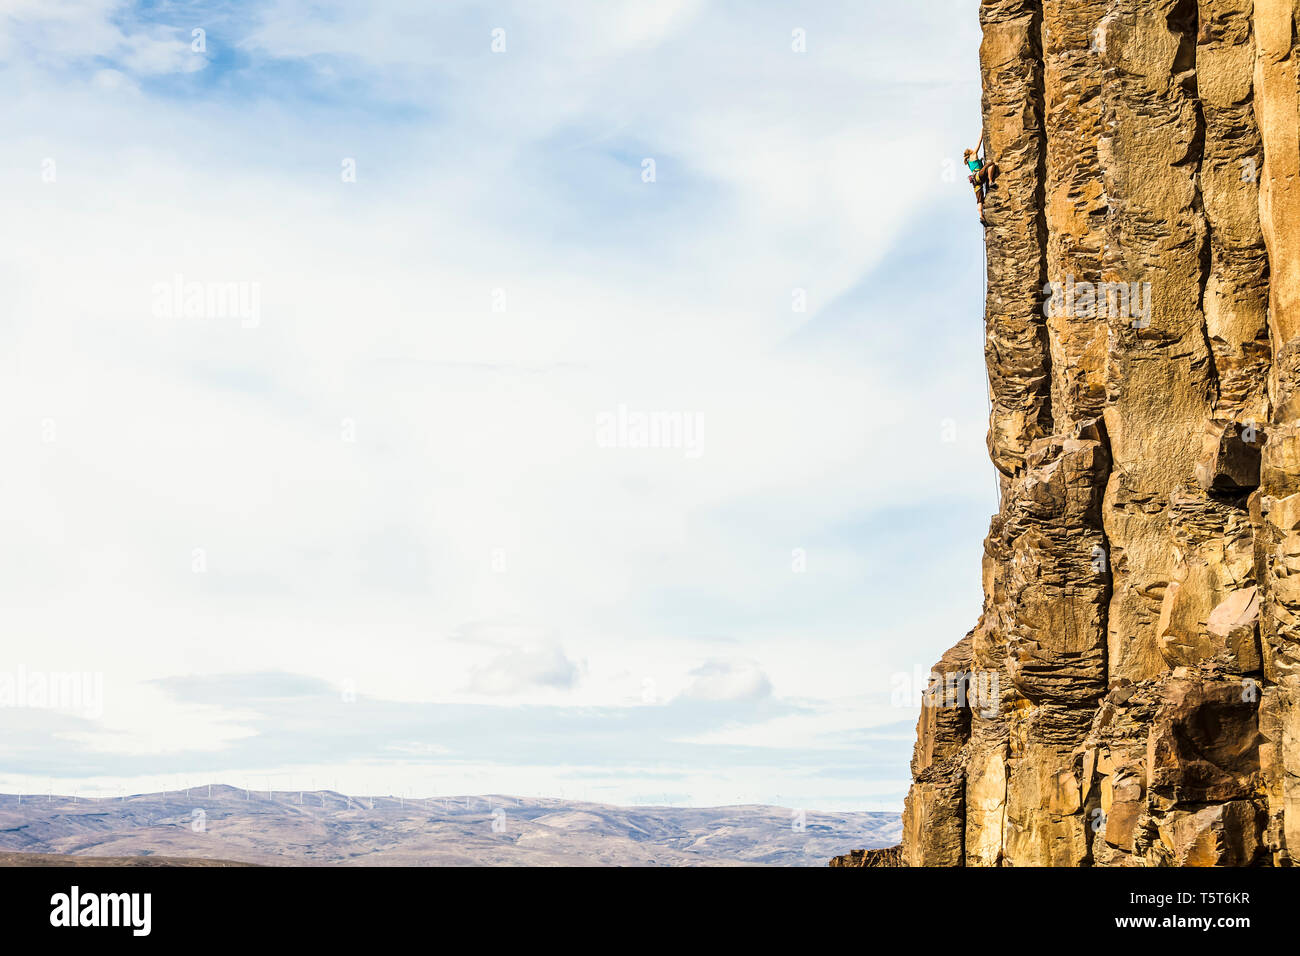 A woman climbing a basalt rock cliff in central Washington State, USA. Stock Photo